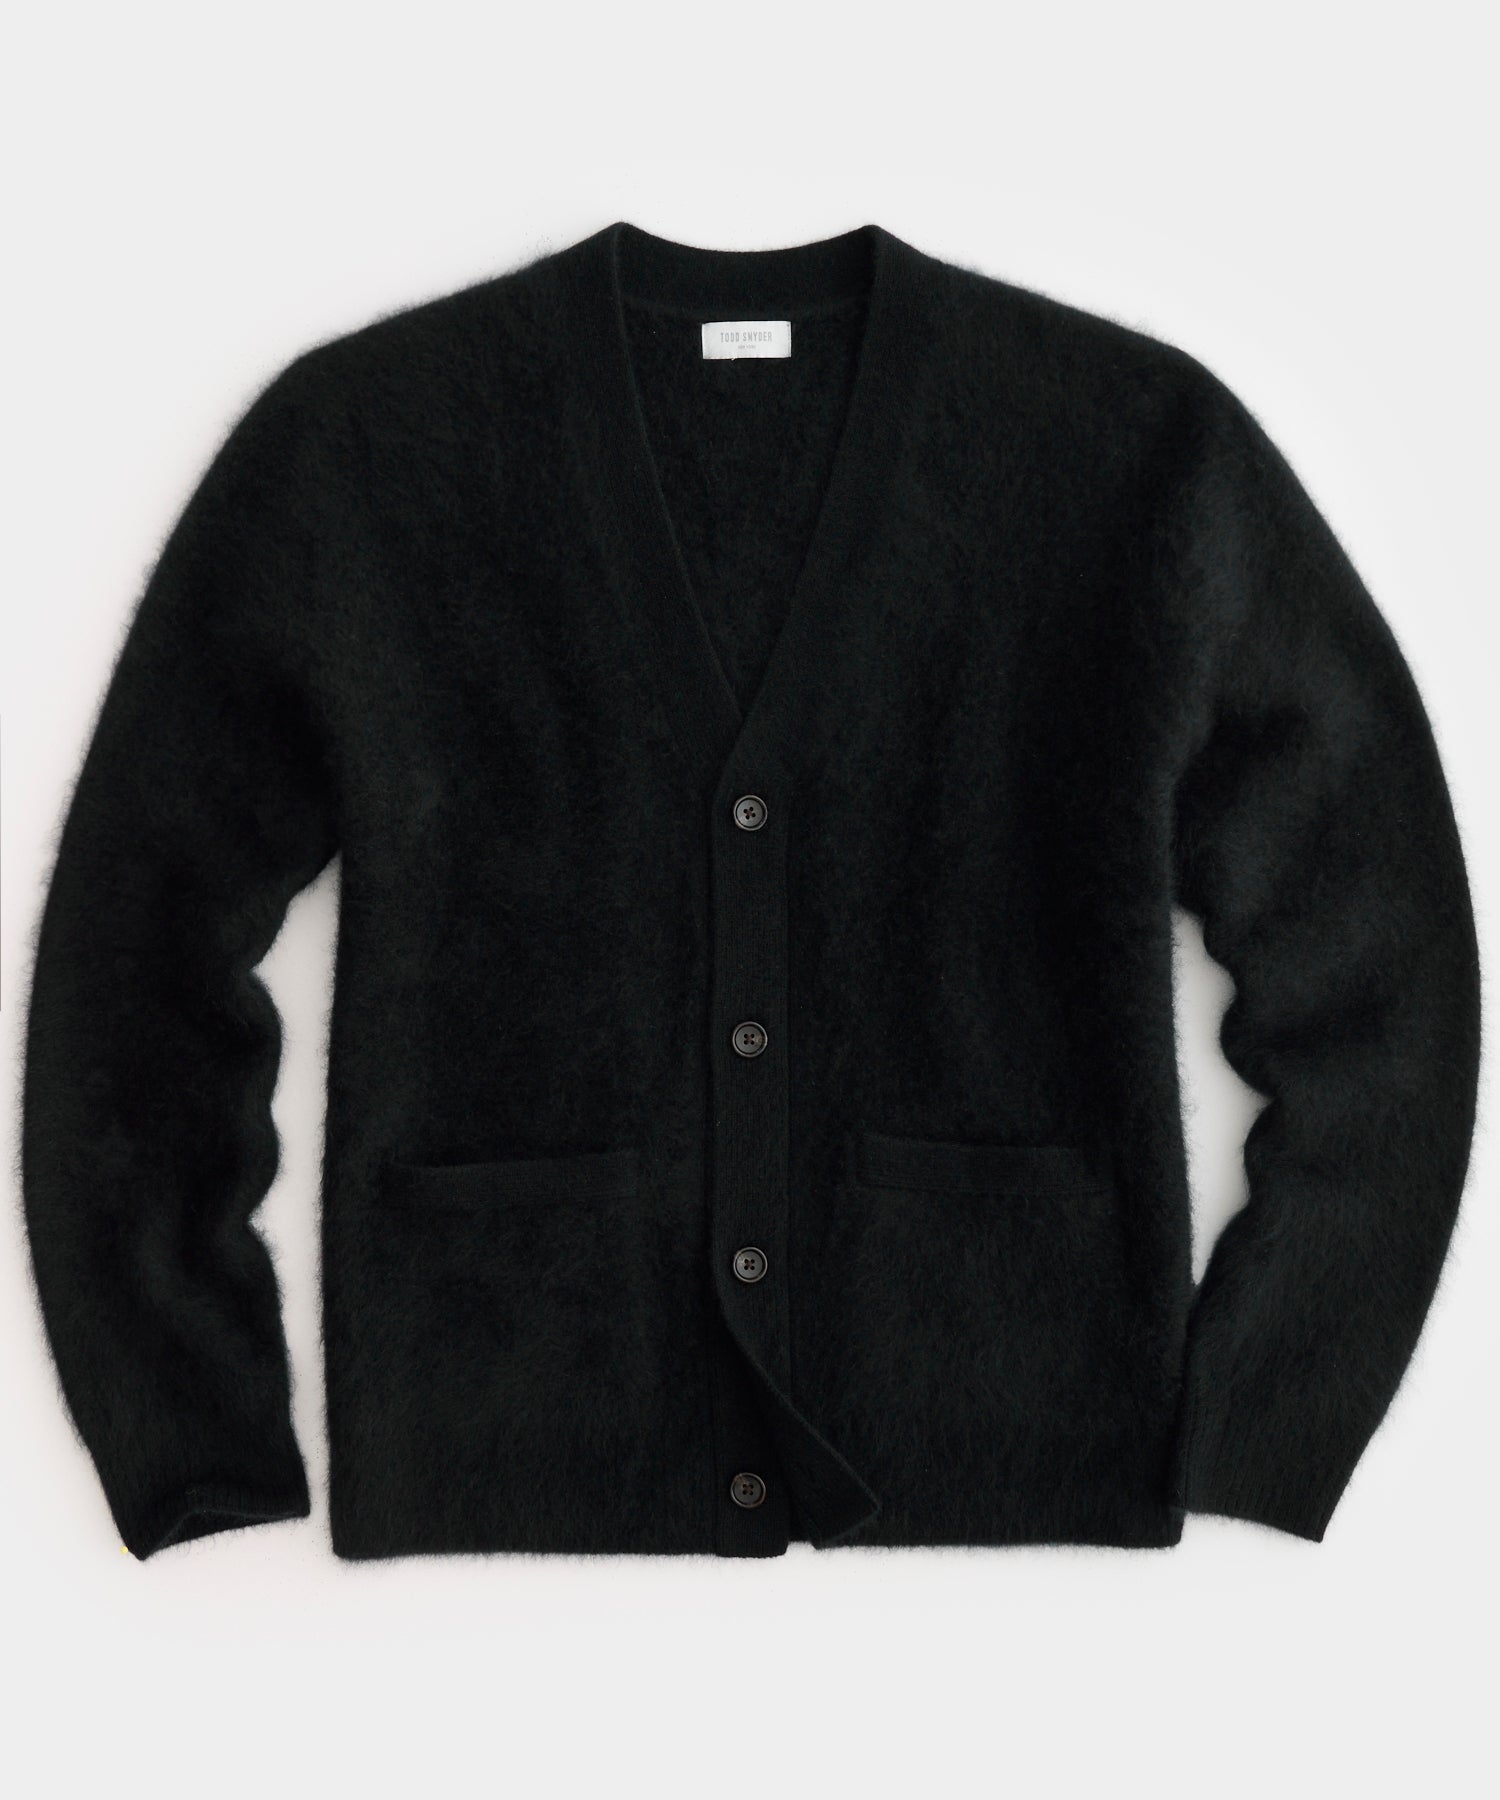 Brushed Cashmere Cardigan in Black